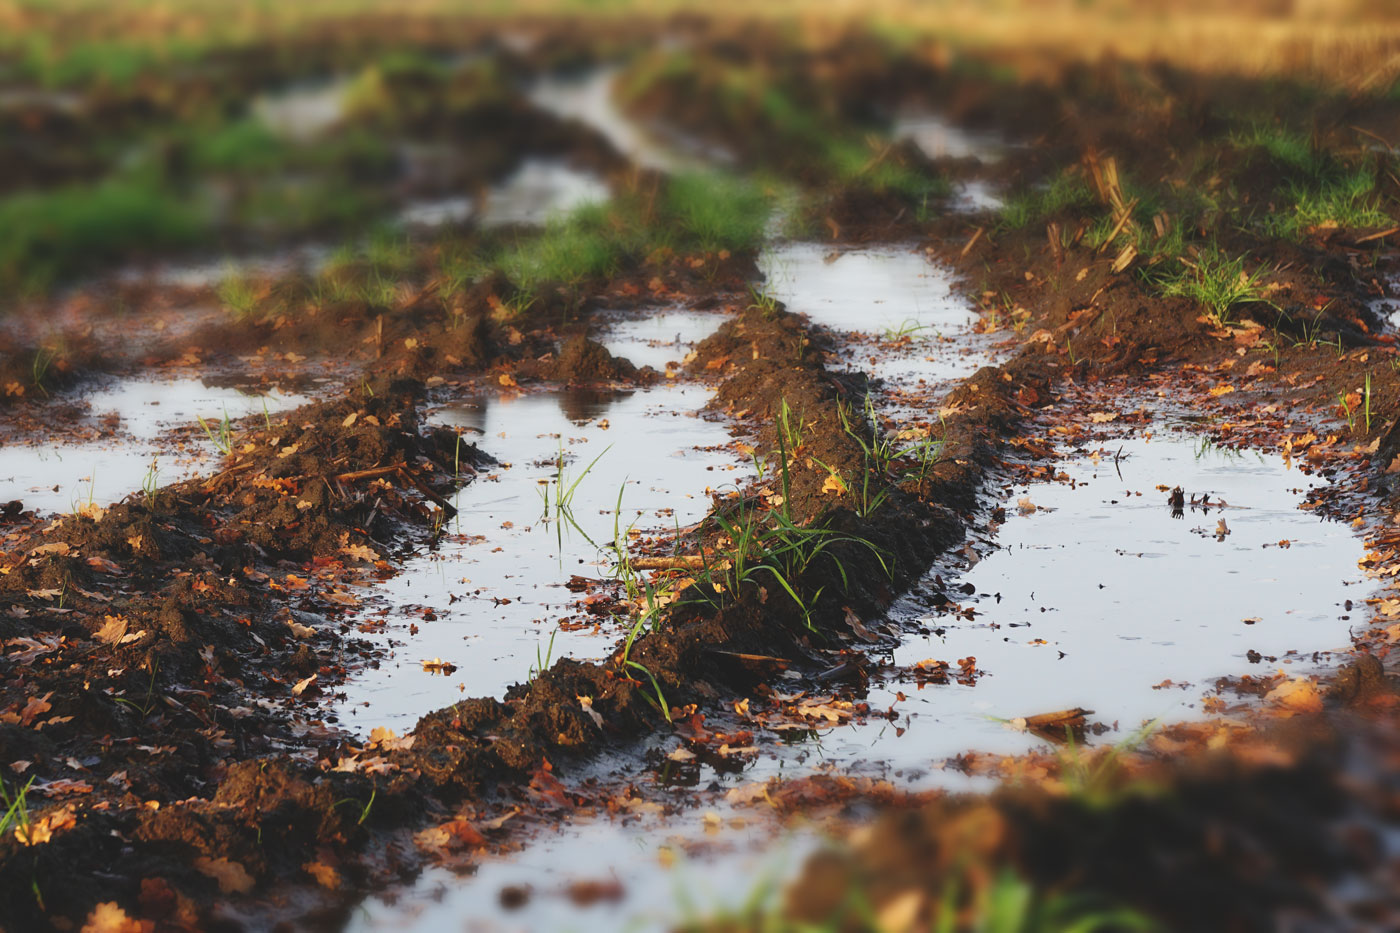 puddles in crop field courtesy of Veltman34 via Shutterstock